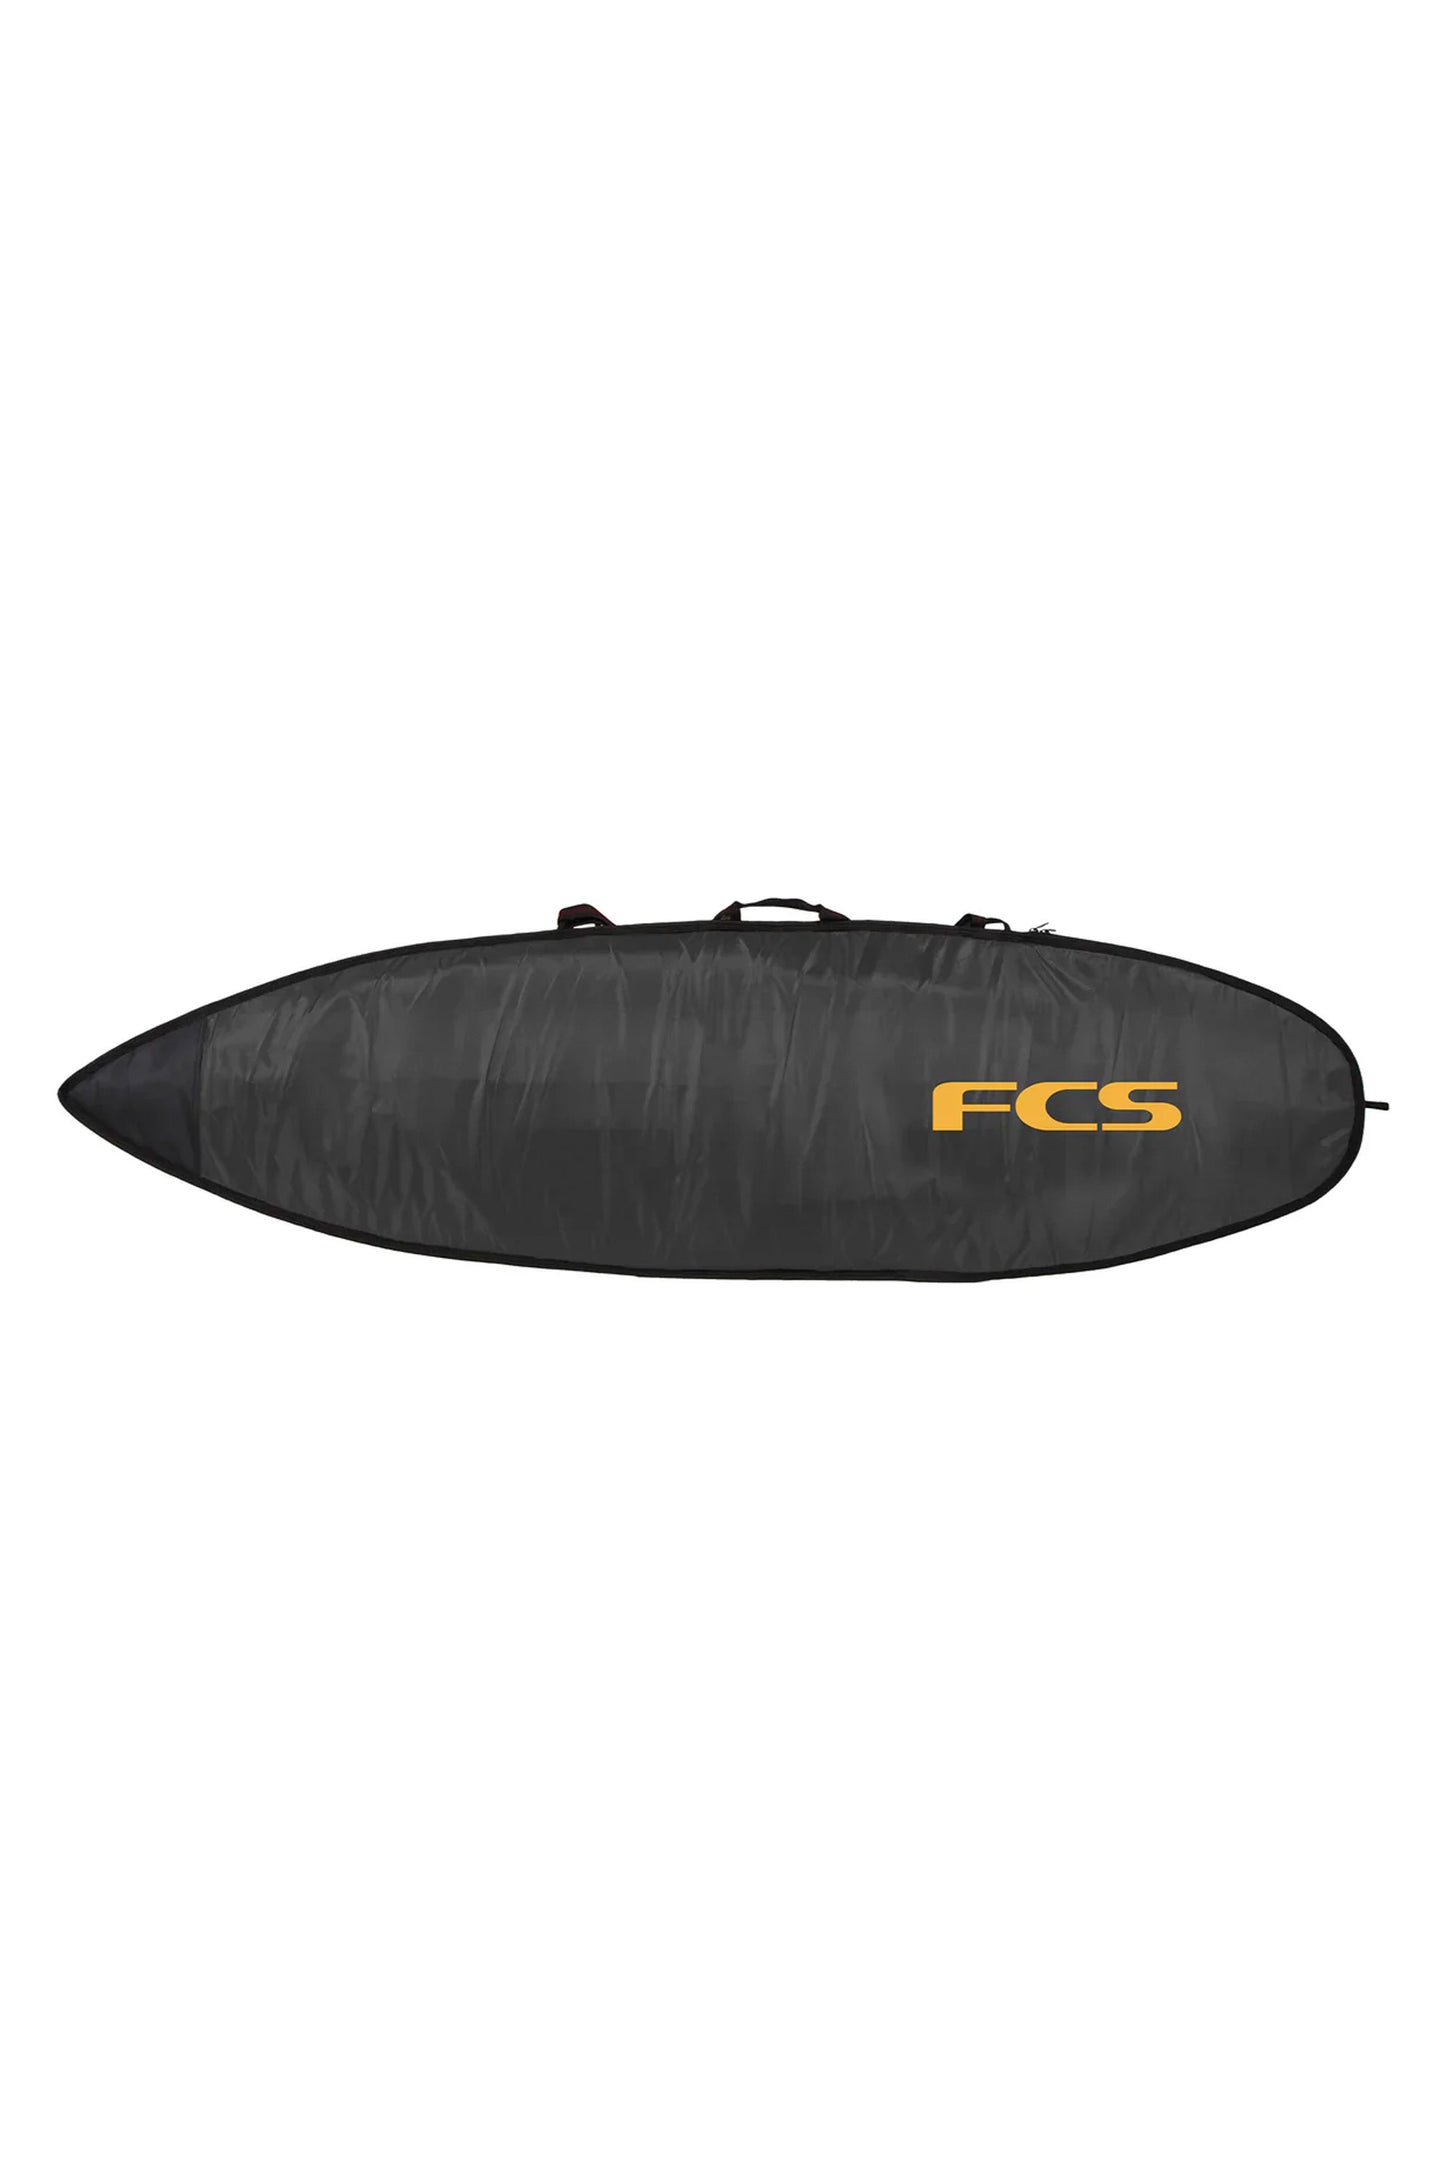 Pukas-Surf-Shop-fcs-classic-all-purpose-cover-board-cover-black-mango